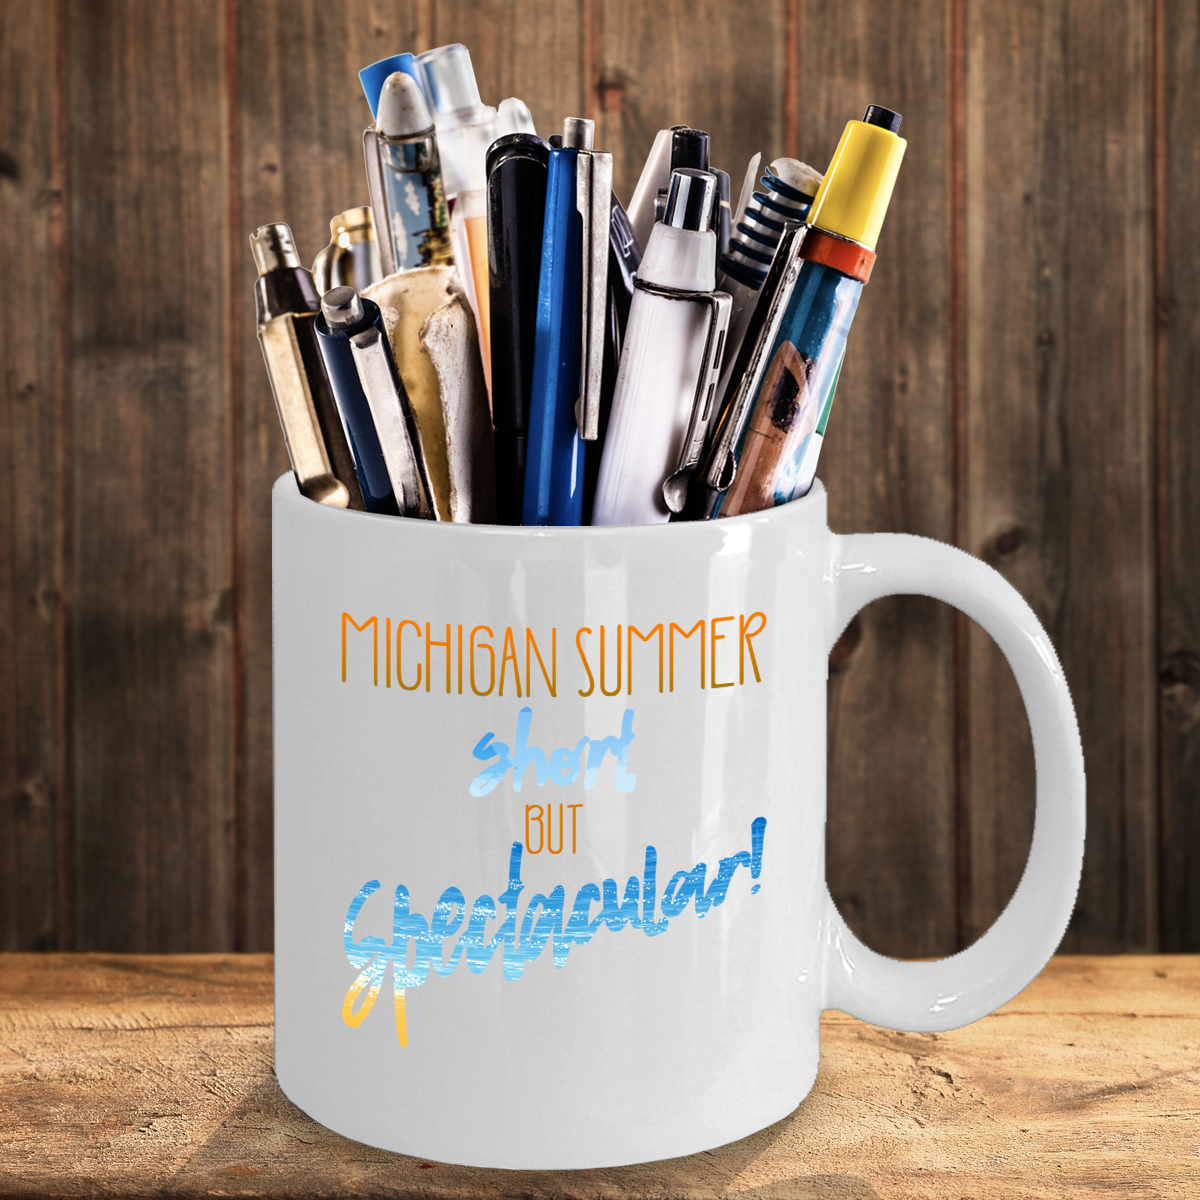 Michigan Summer Short But Spectacular Mug